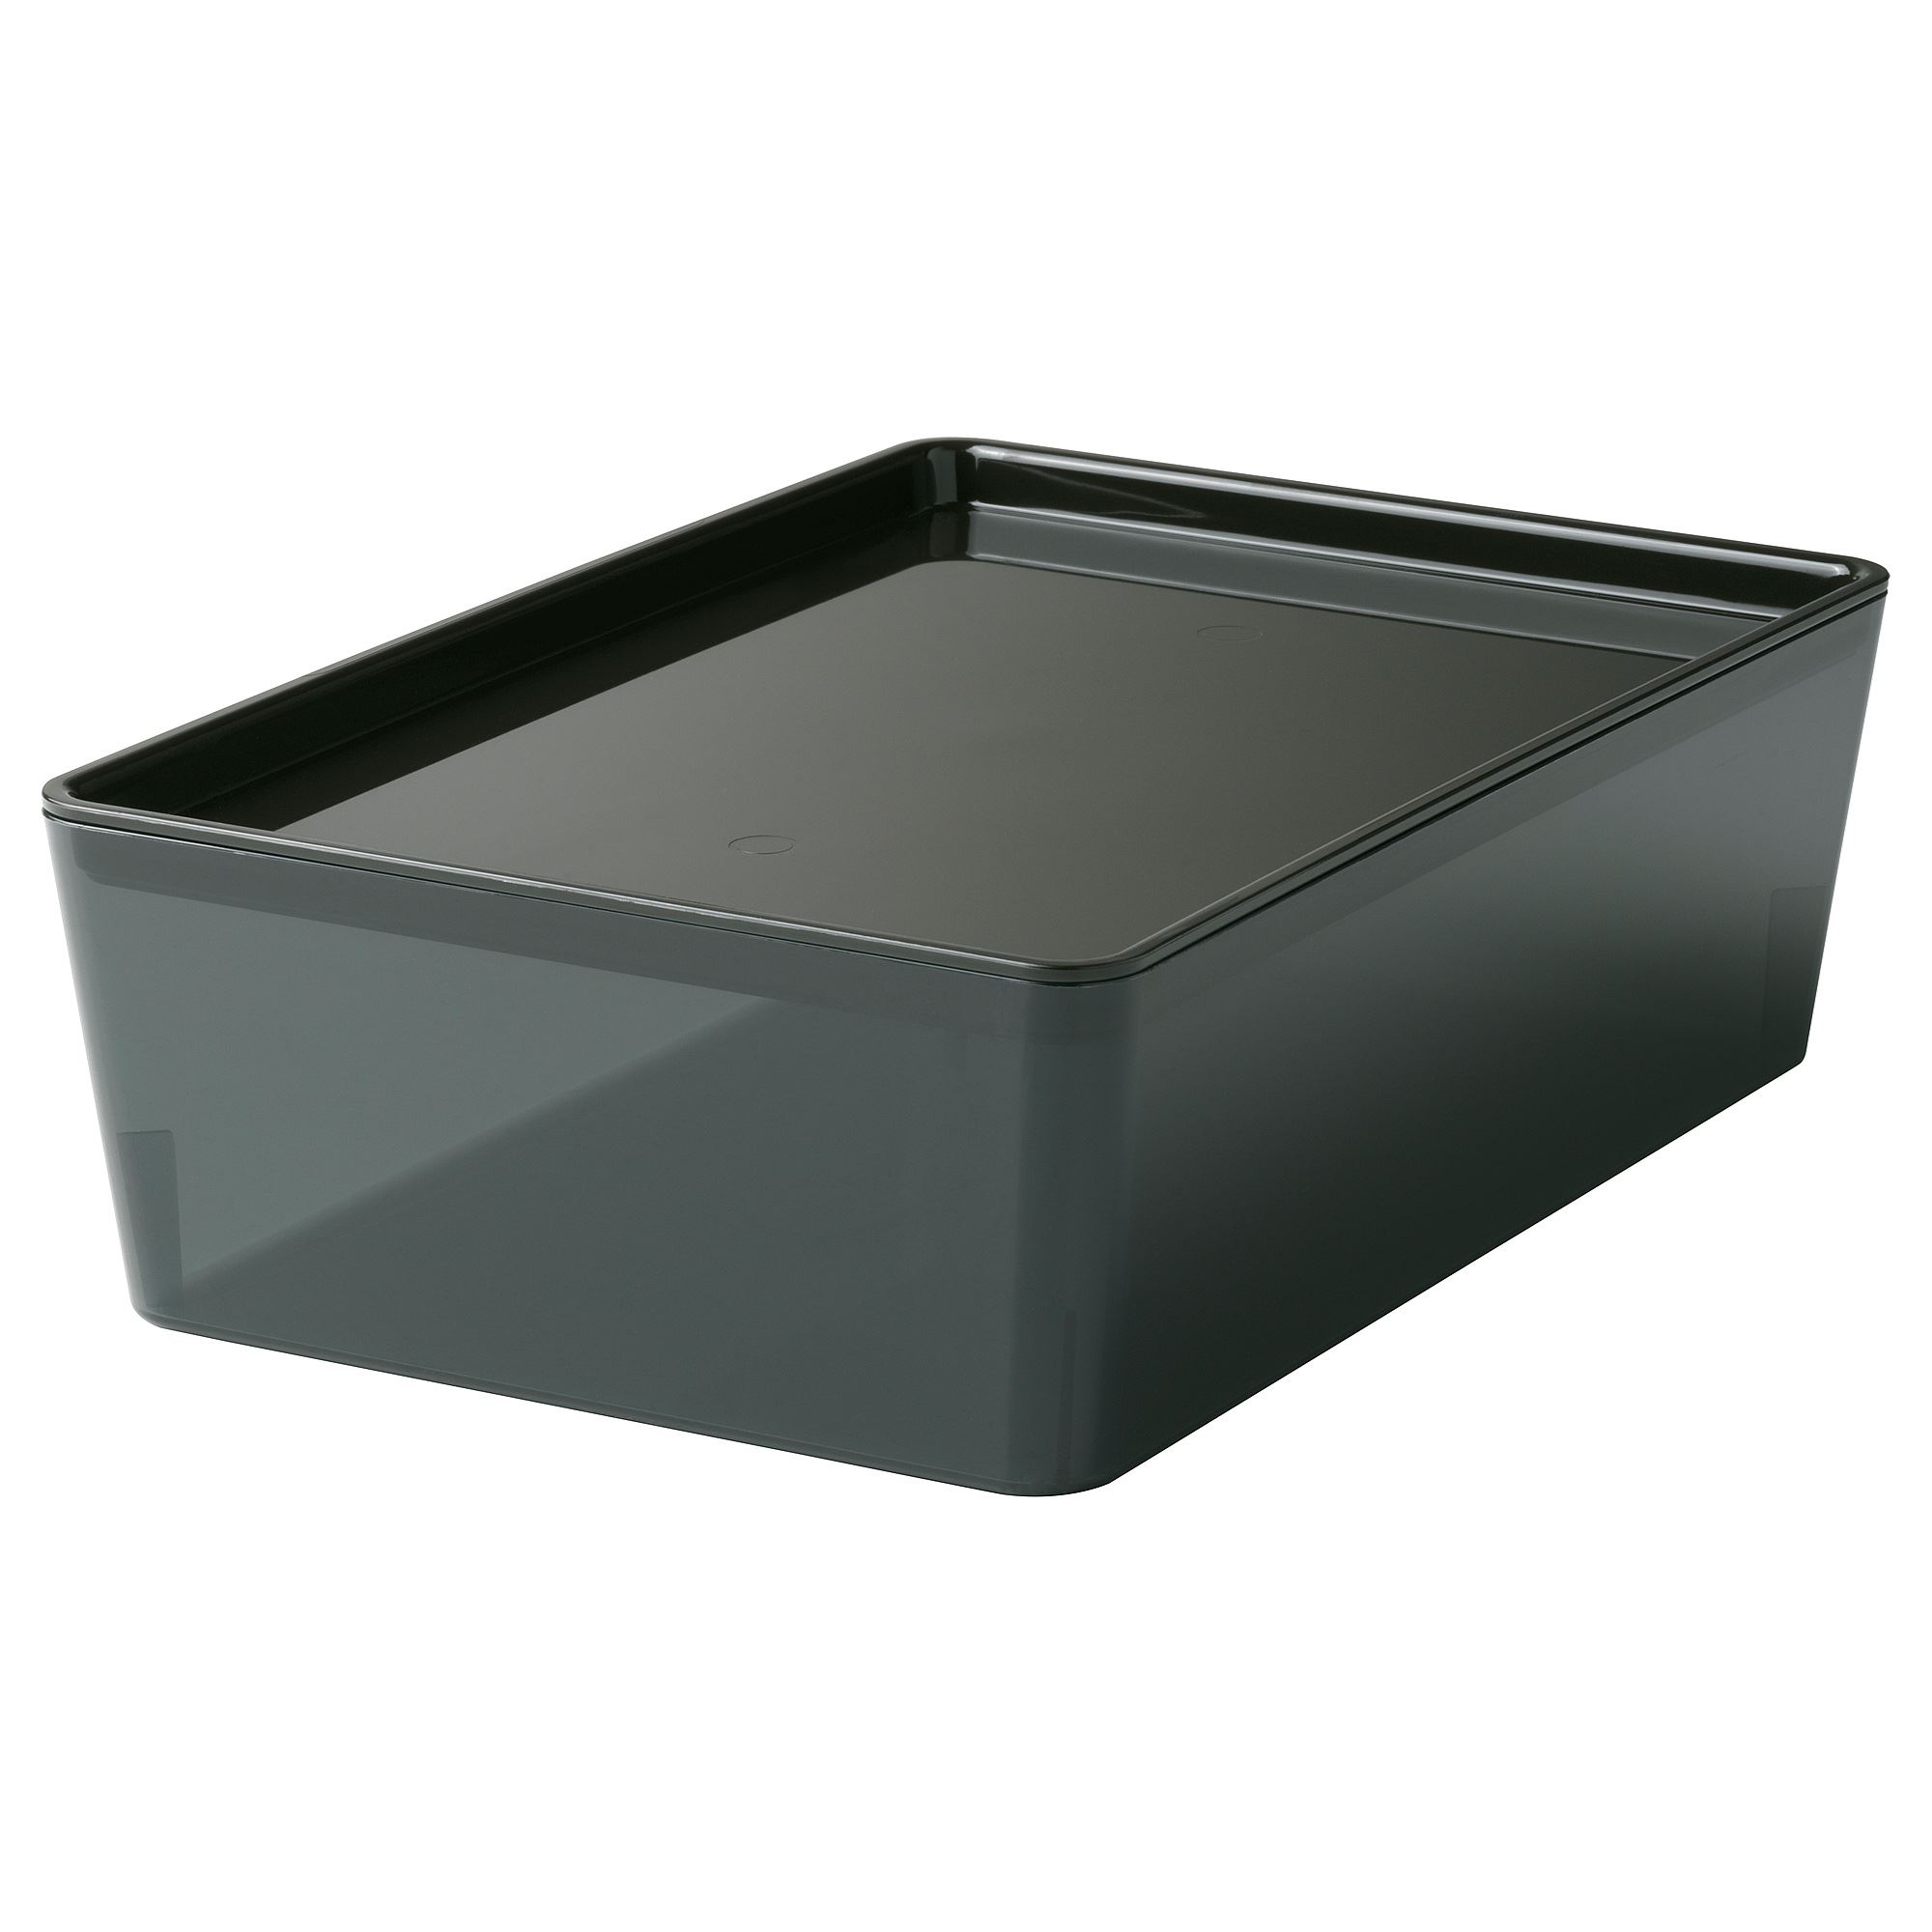 KUGGIS şeffaf siyah 18x26x8 cm kapaklı kutu | IKEA